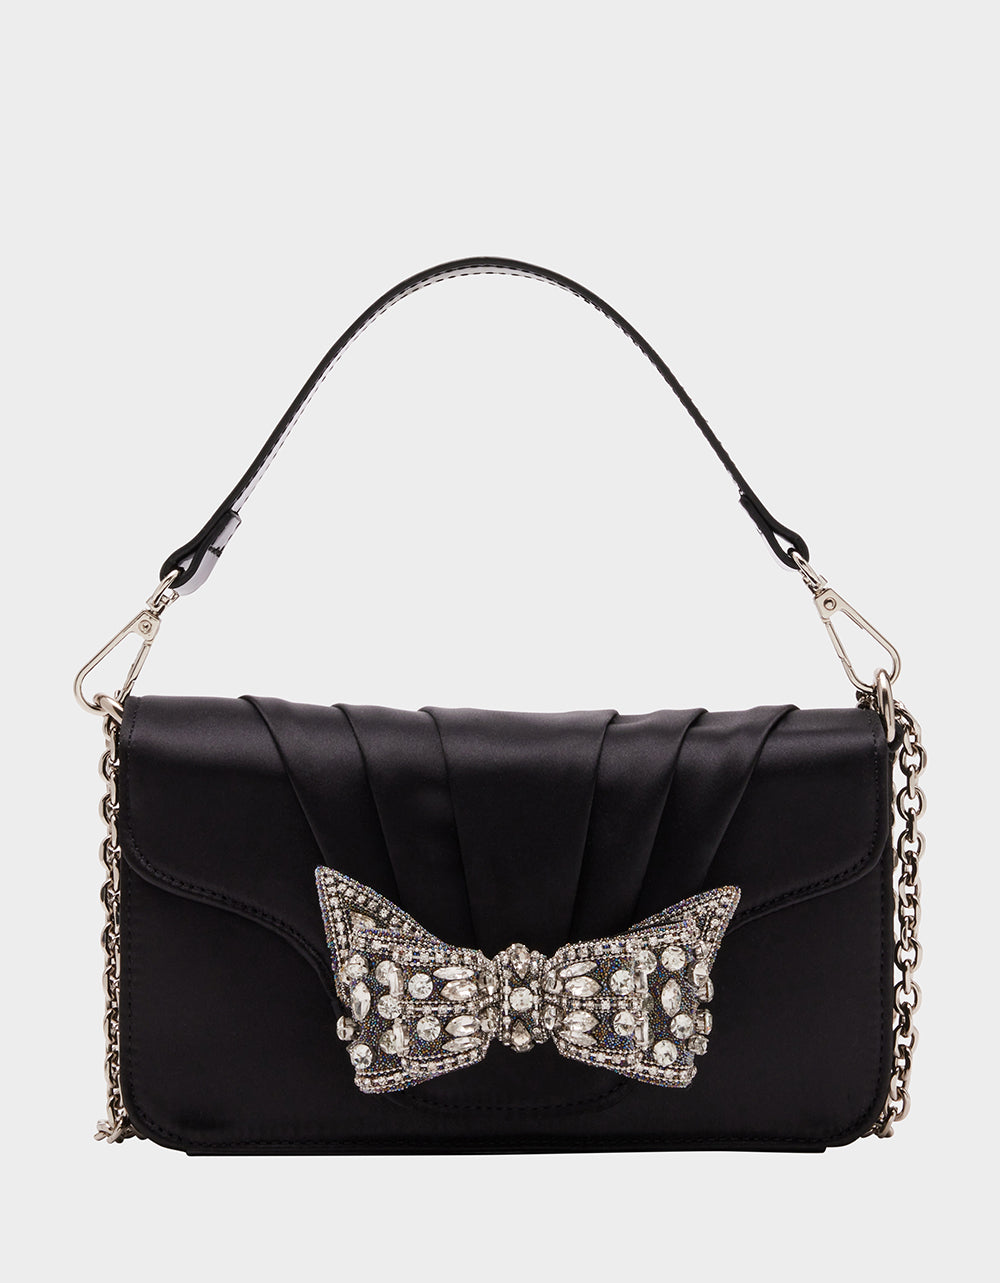 Betsey Johnson Bow Handbag Black Leather Quilted Shoulder Bag Tote Medium -  $27 - From Sahara